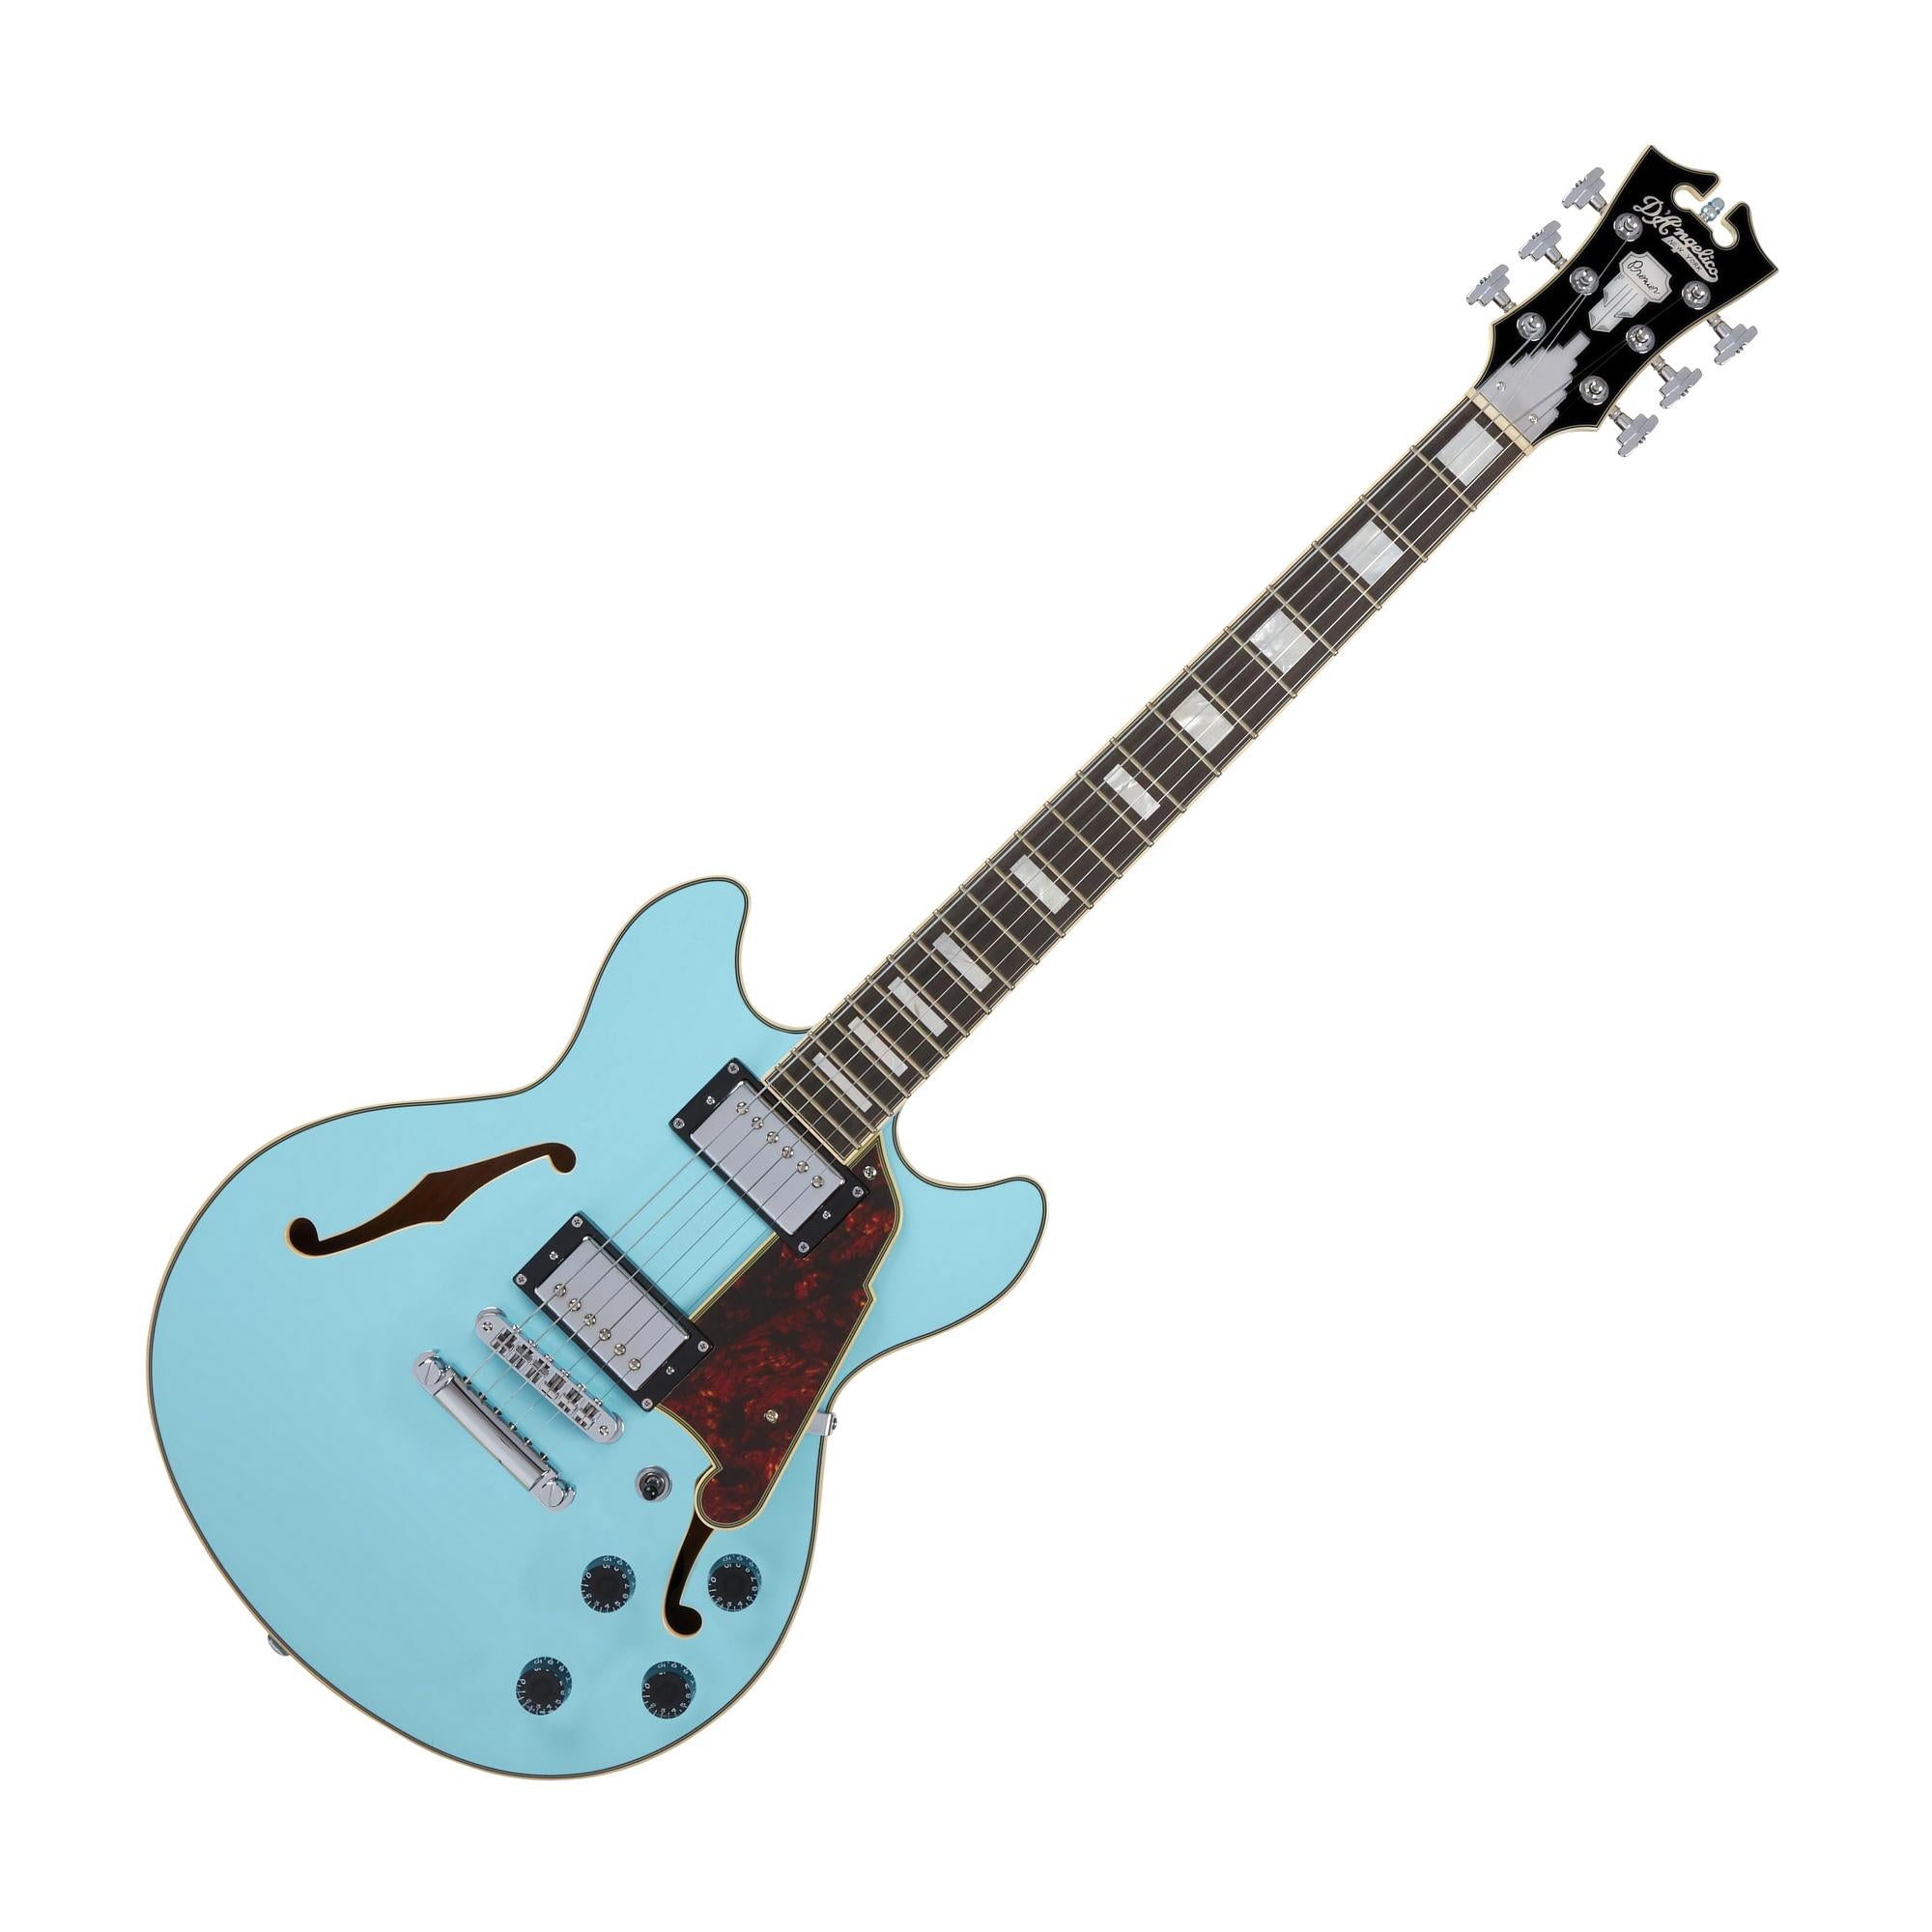 D'Angelico DAPMINIDCSKBCS Premier Mini DC Semi Hollow Electric Guitar w/Stopbar Tailpiece, Sky Blue